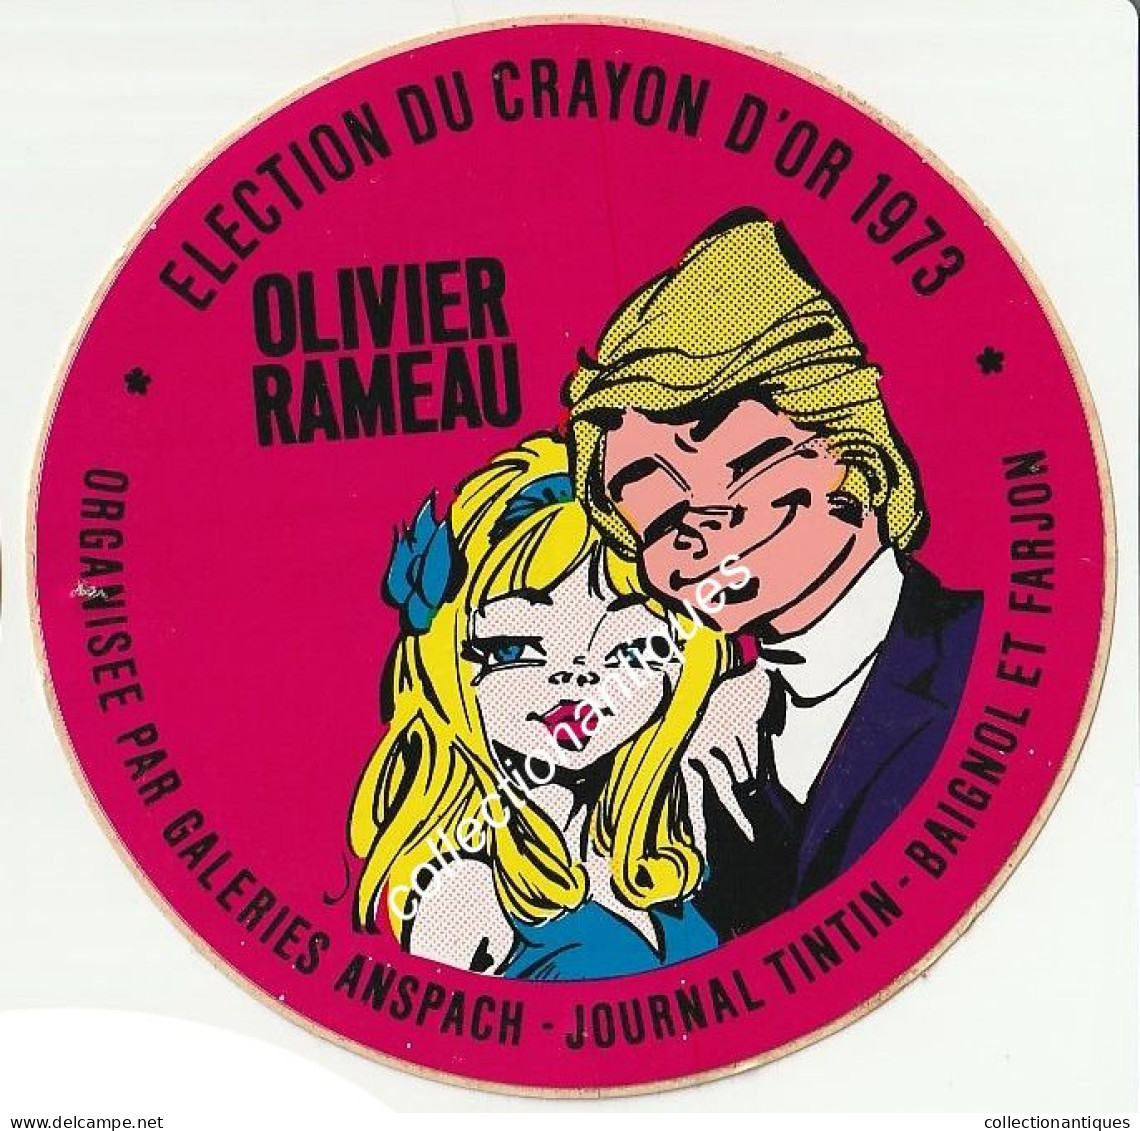 Olivier Rameau RARE Sticker Autocollant Election Du Crayon D'Or 1973 Galeries Anspach Journal Tintin Baignol Et Farjon - Autocollants